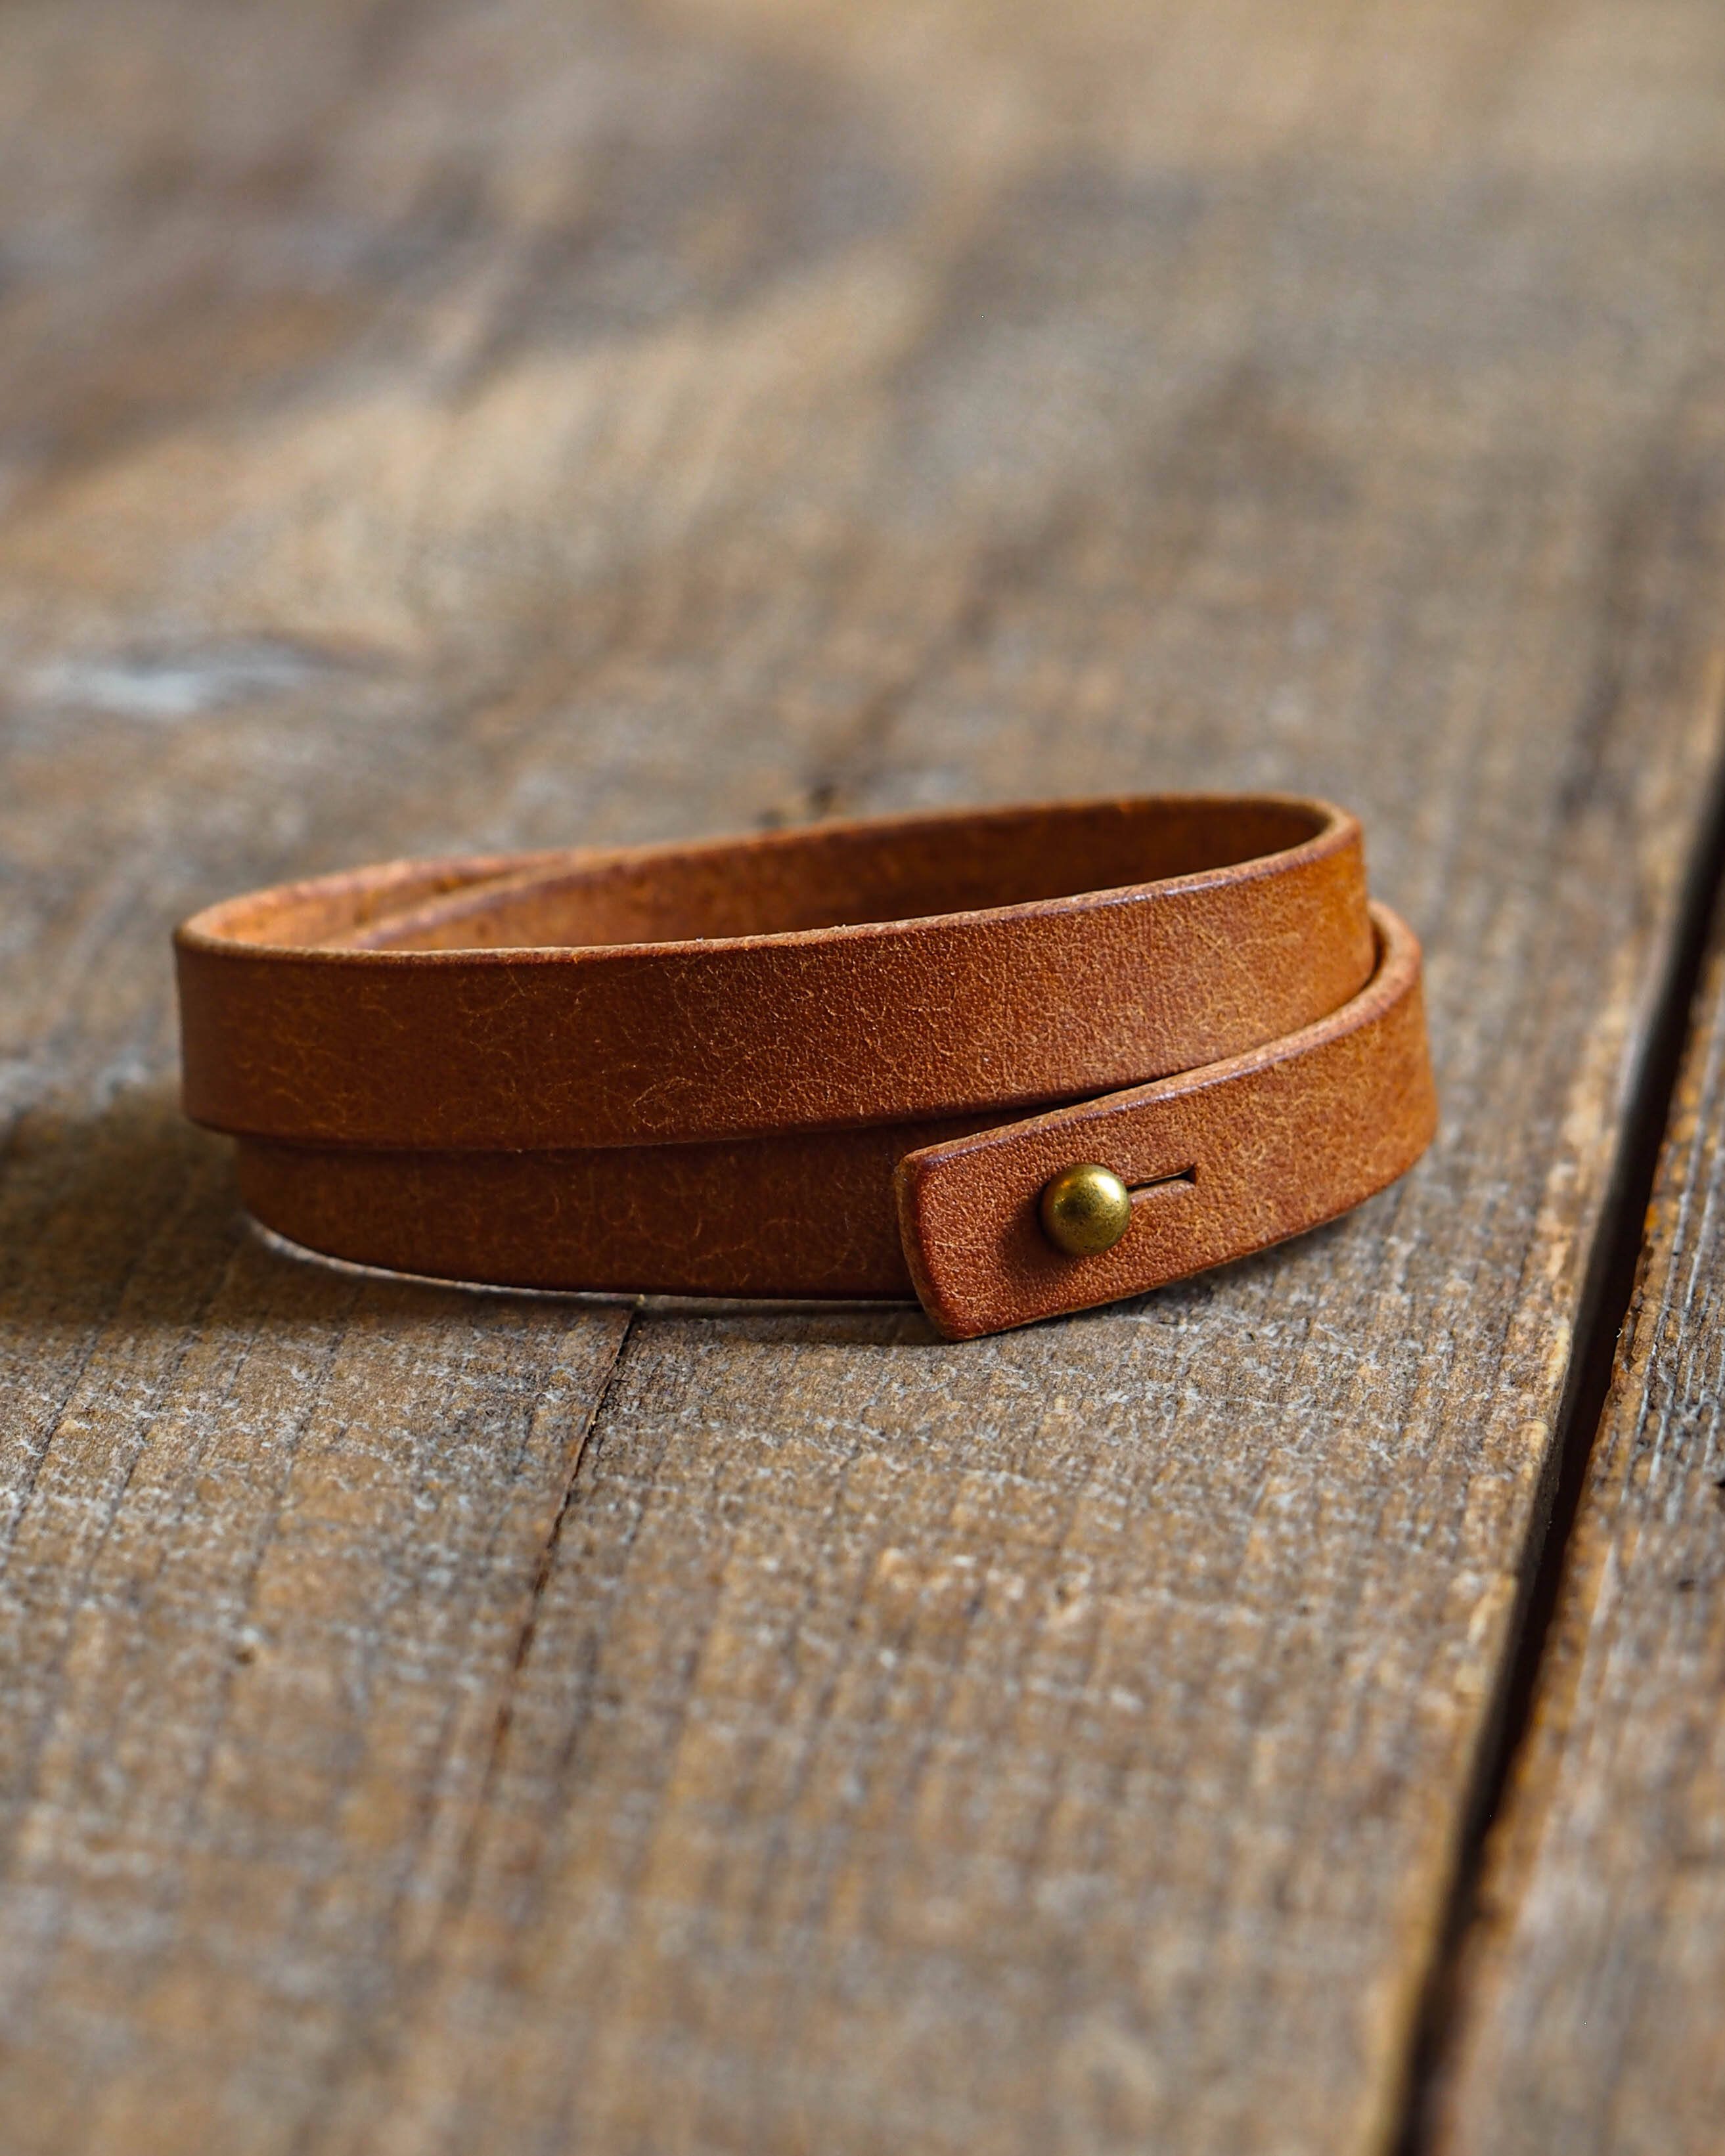 Luava handmade leather wrist bracelet band cognac